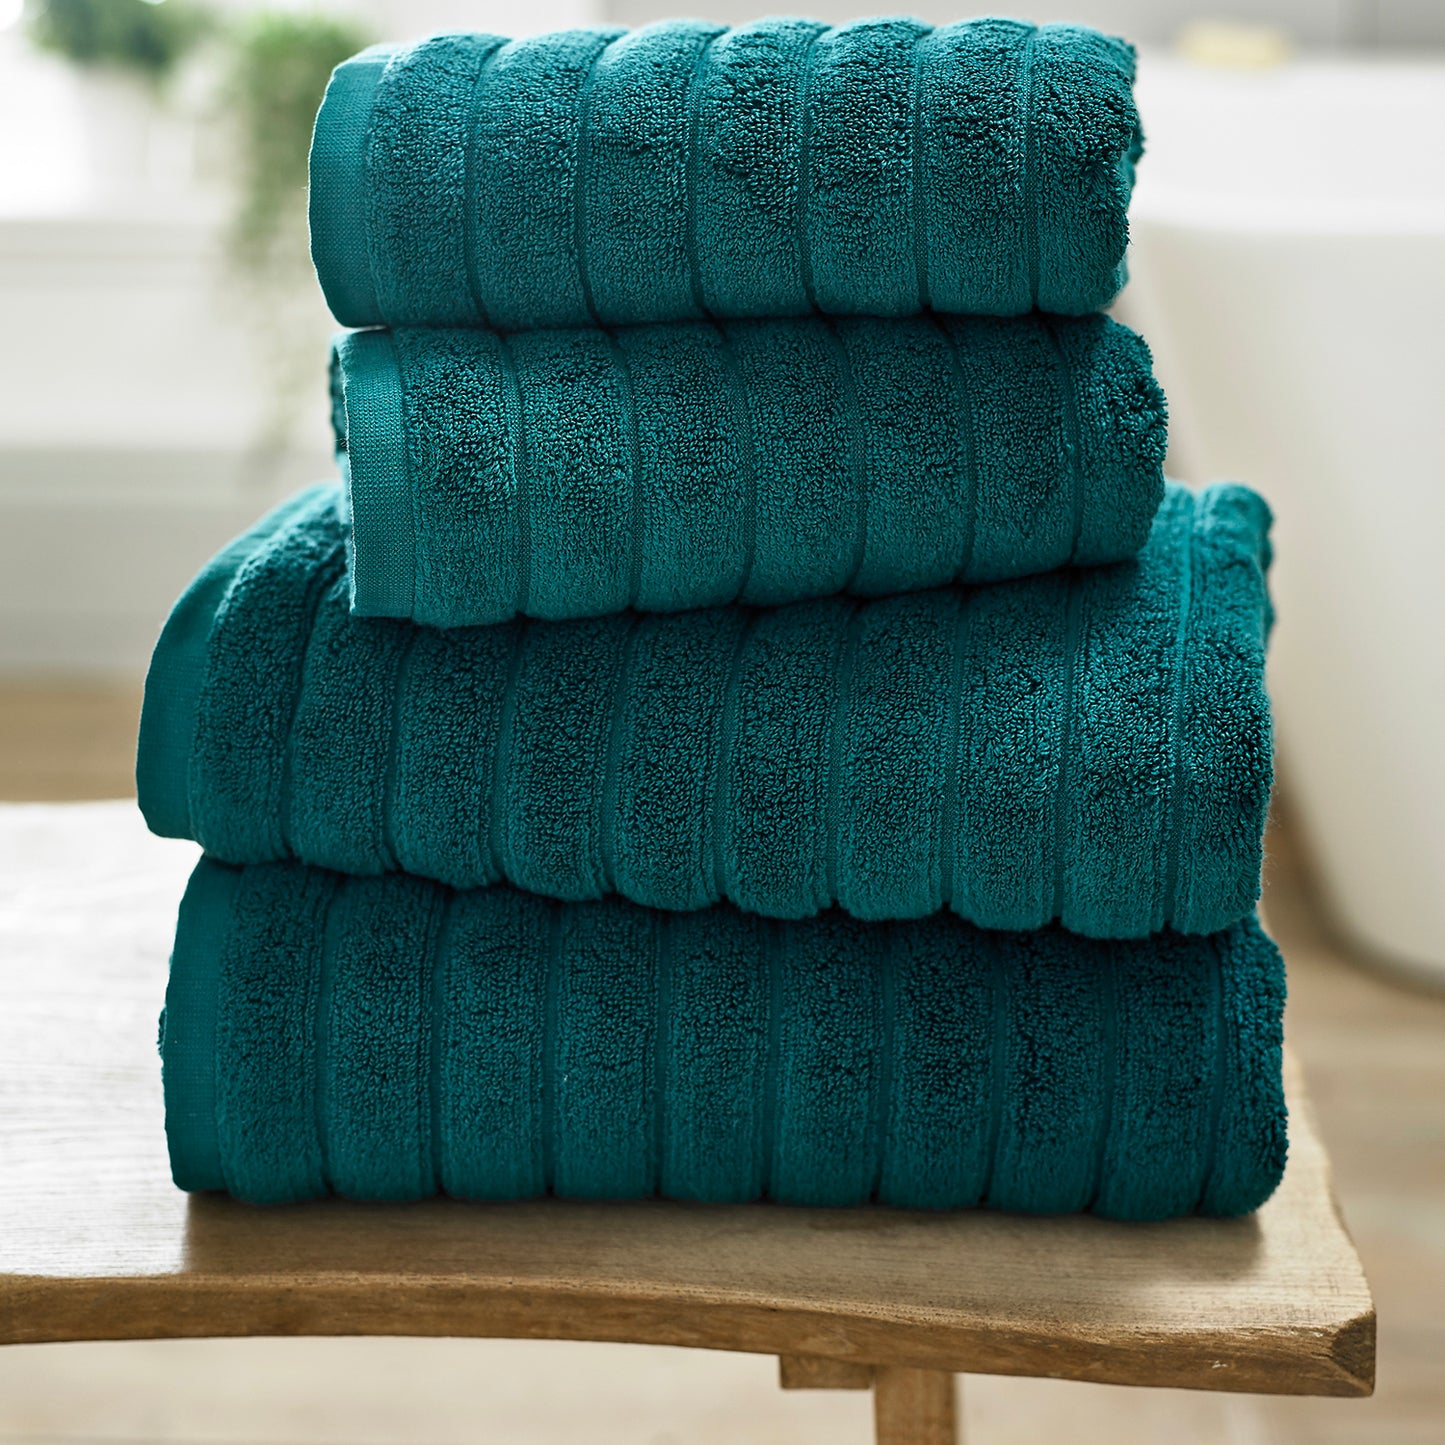 The Lyndon Company Ribbleton 700gsm Zero Twist Dark Green Towels